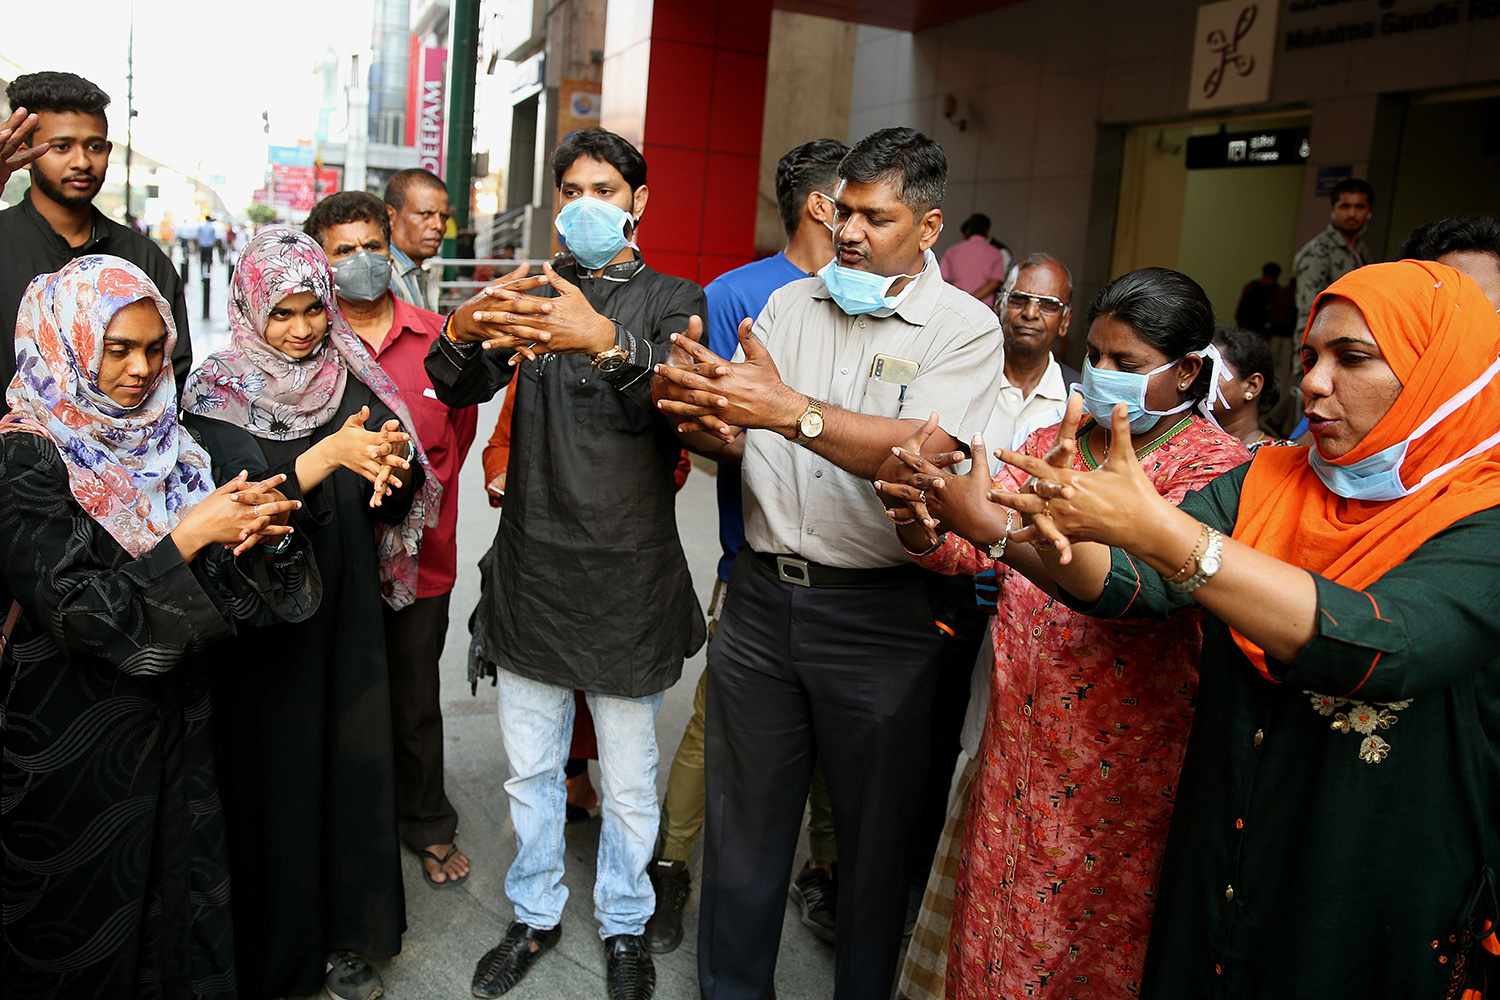 Preventative measures against novel coronavirus outbreak in Bangalore, India - 05 Mar 2020